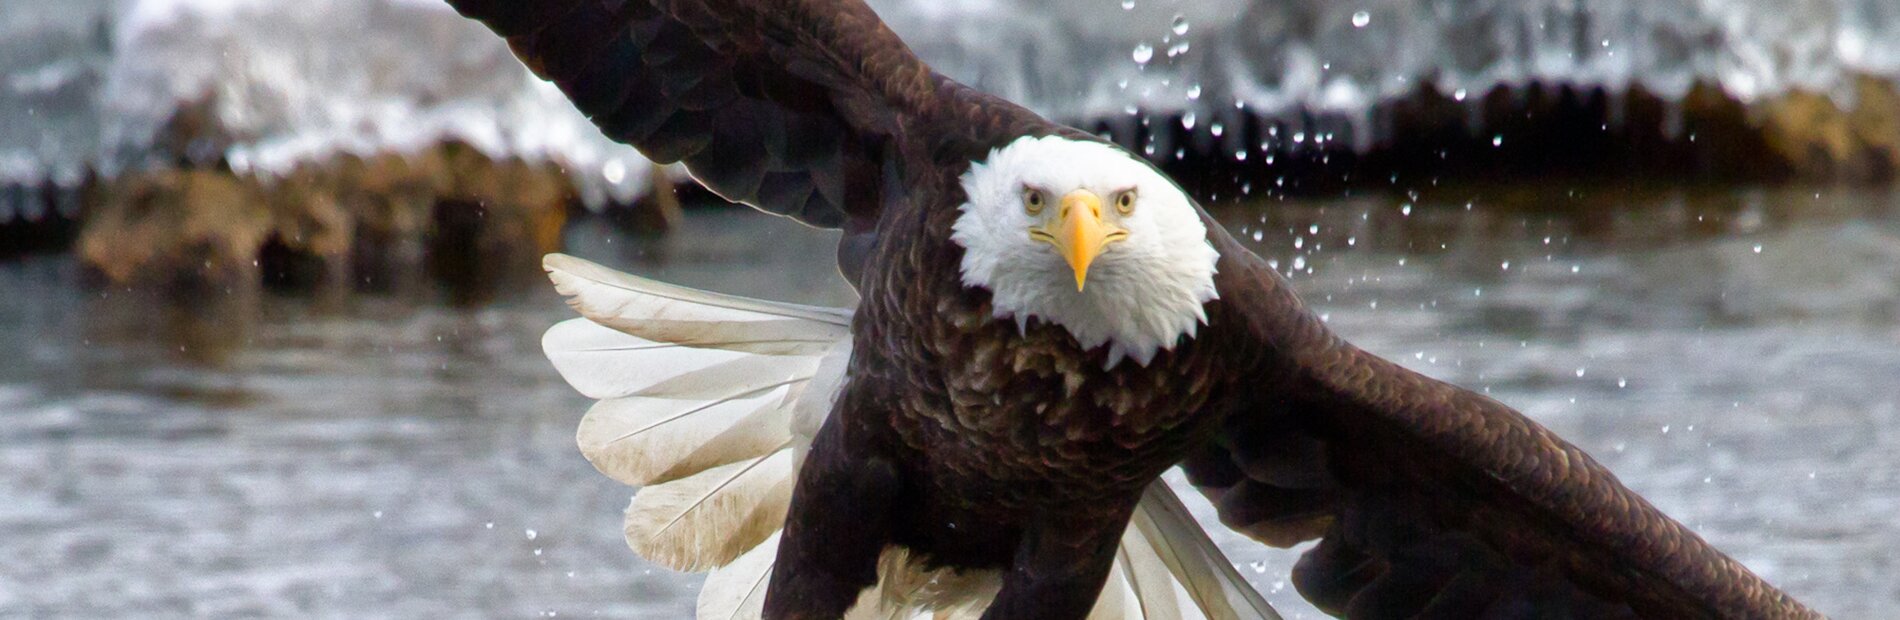 Bald Eagle Flying Over Water